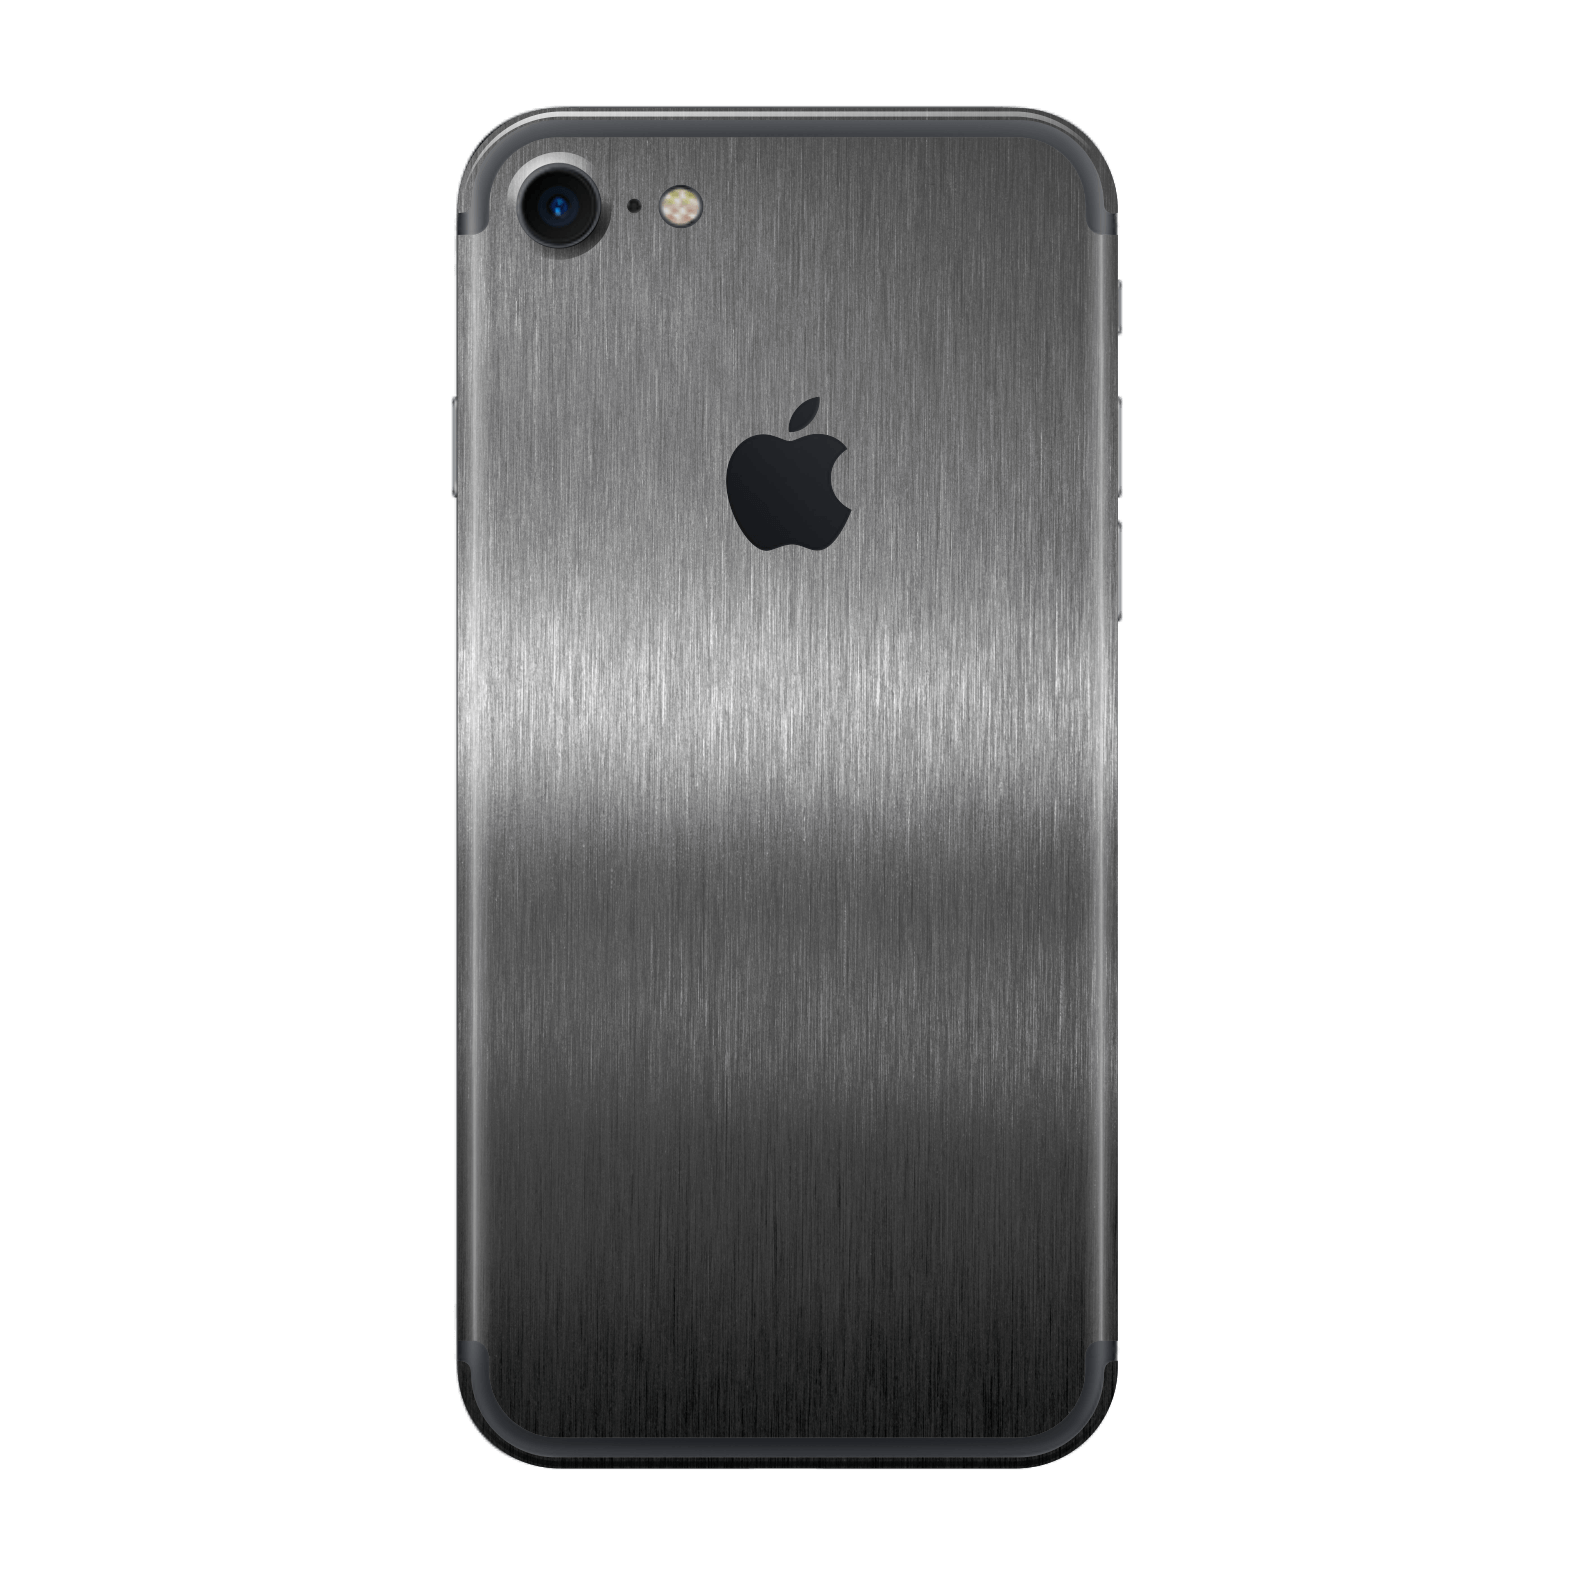 iPhone 7 Brushed Metal Titanium Metallic Skin Wrap Sticker Decal Cover Protector by EasySkinz | EasySkinz.com